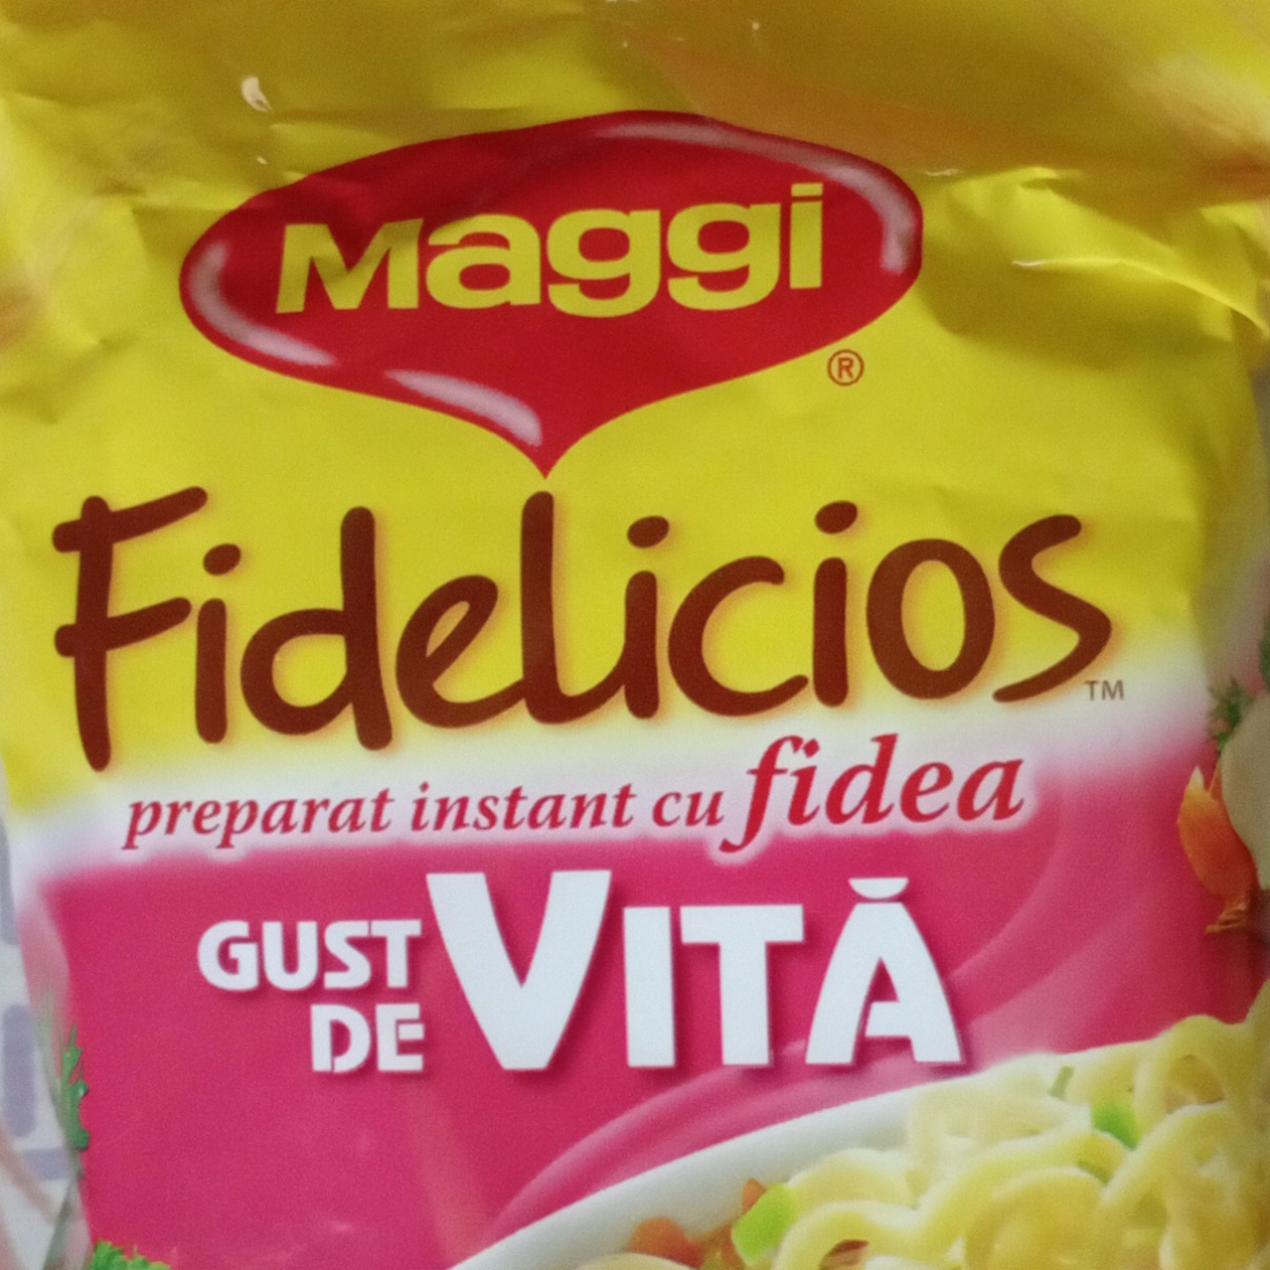 Képek - Fidelicios gust de vita instant leves Maggi